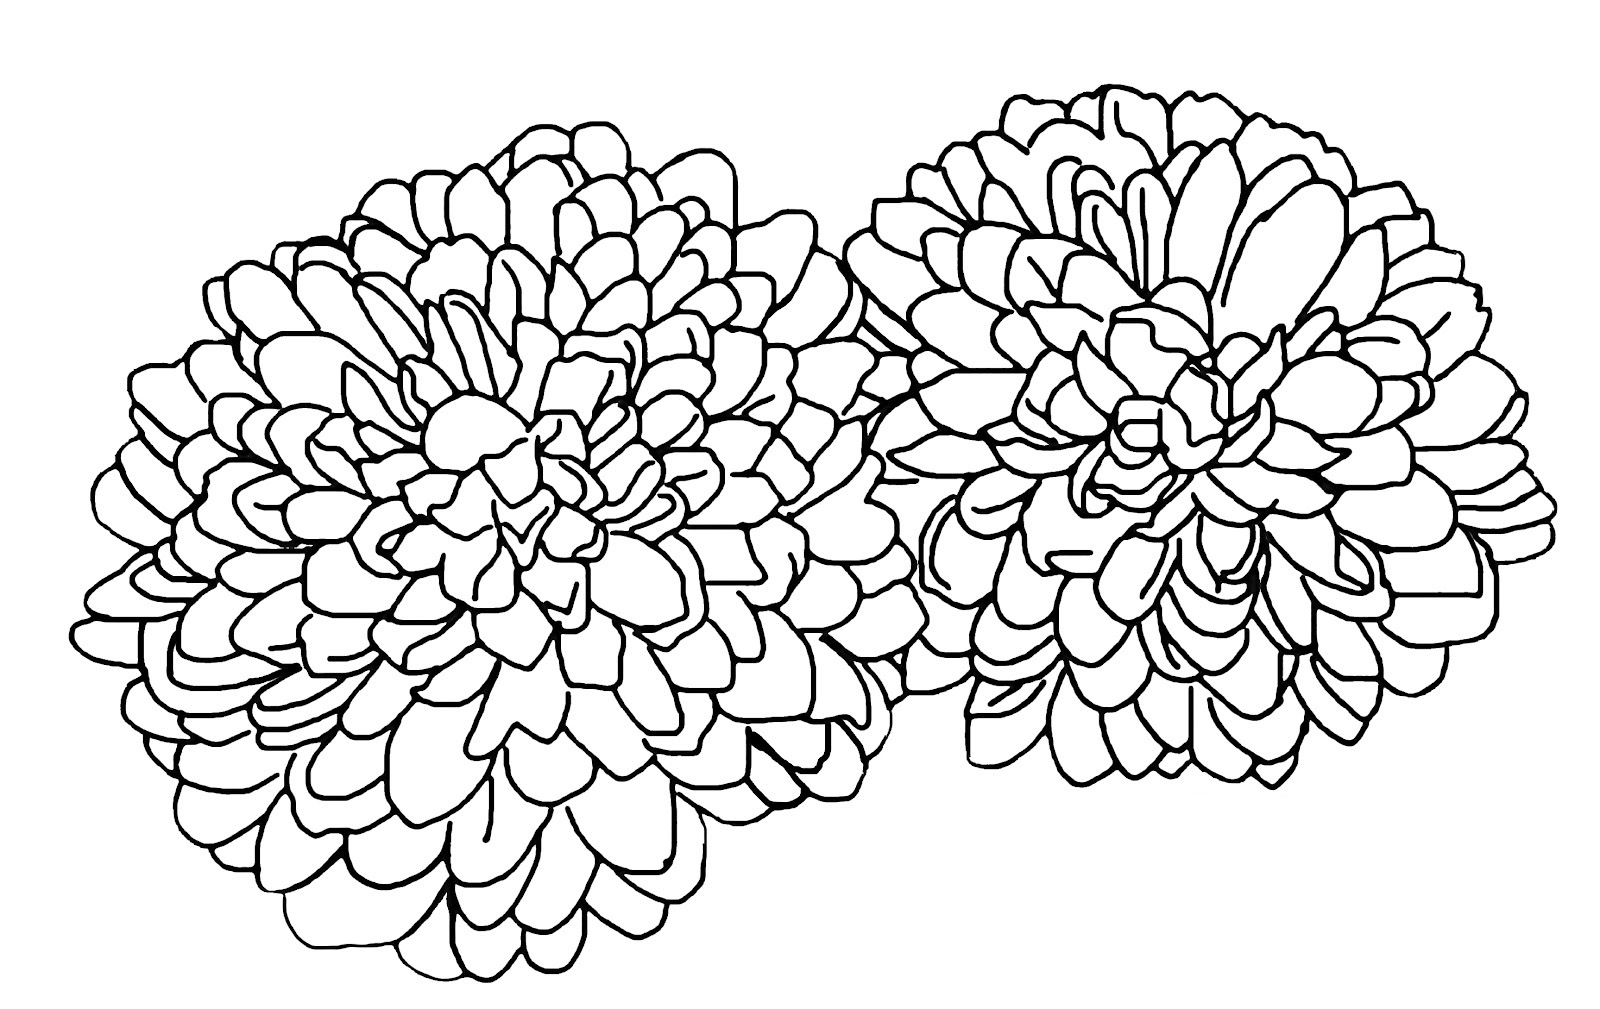 Two chrysanthemums